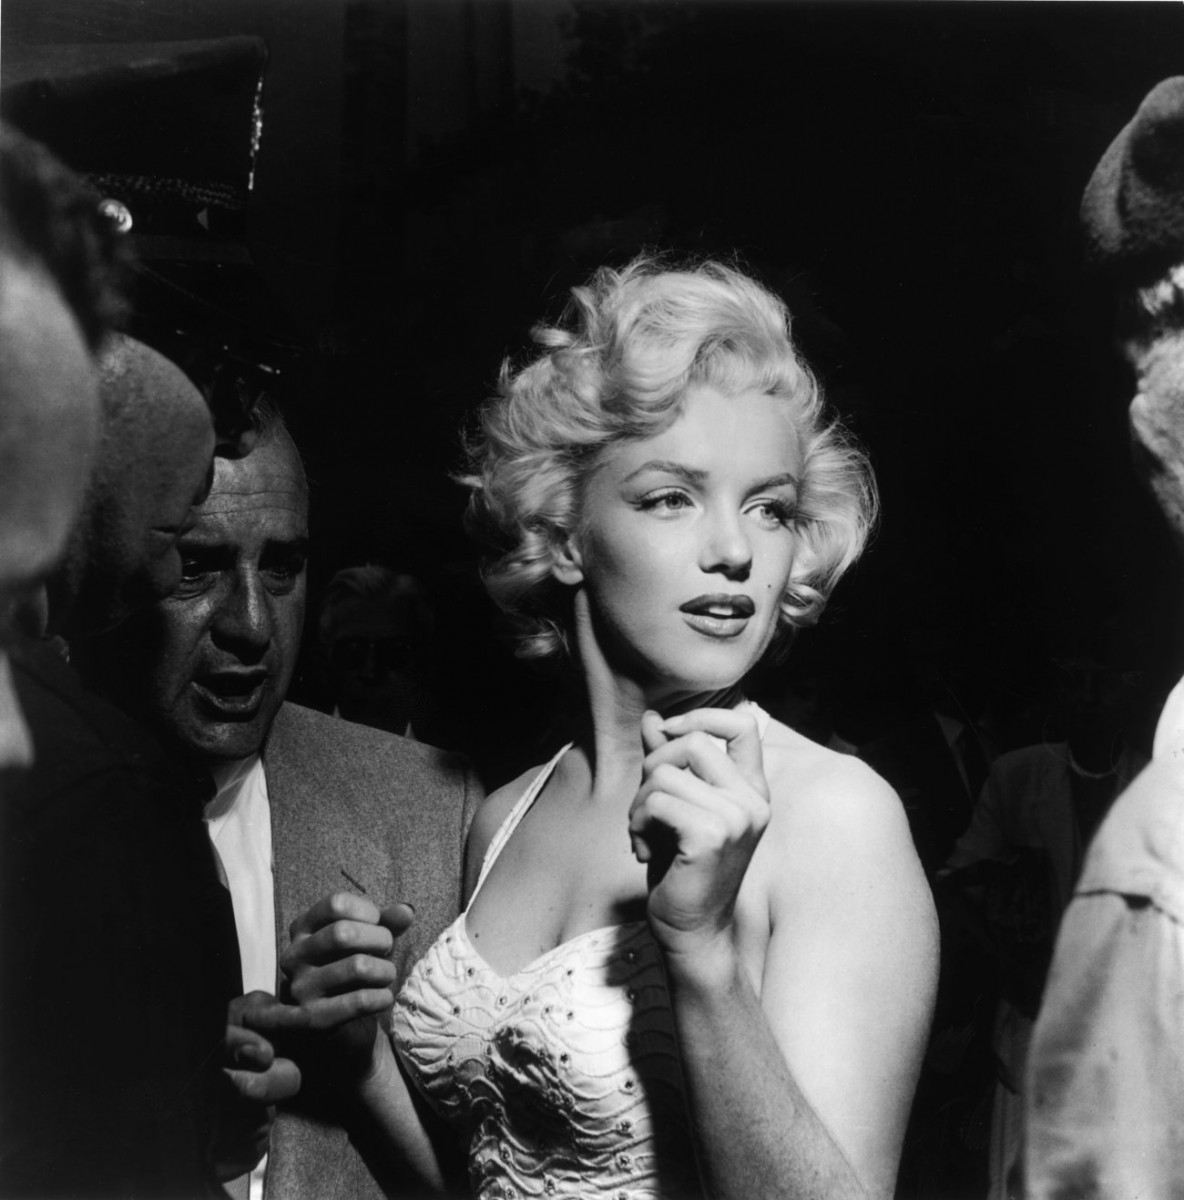 Marilyn Monroe photo 838 of 2214 pics, wallpaper - photo #264860 ...